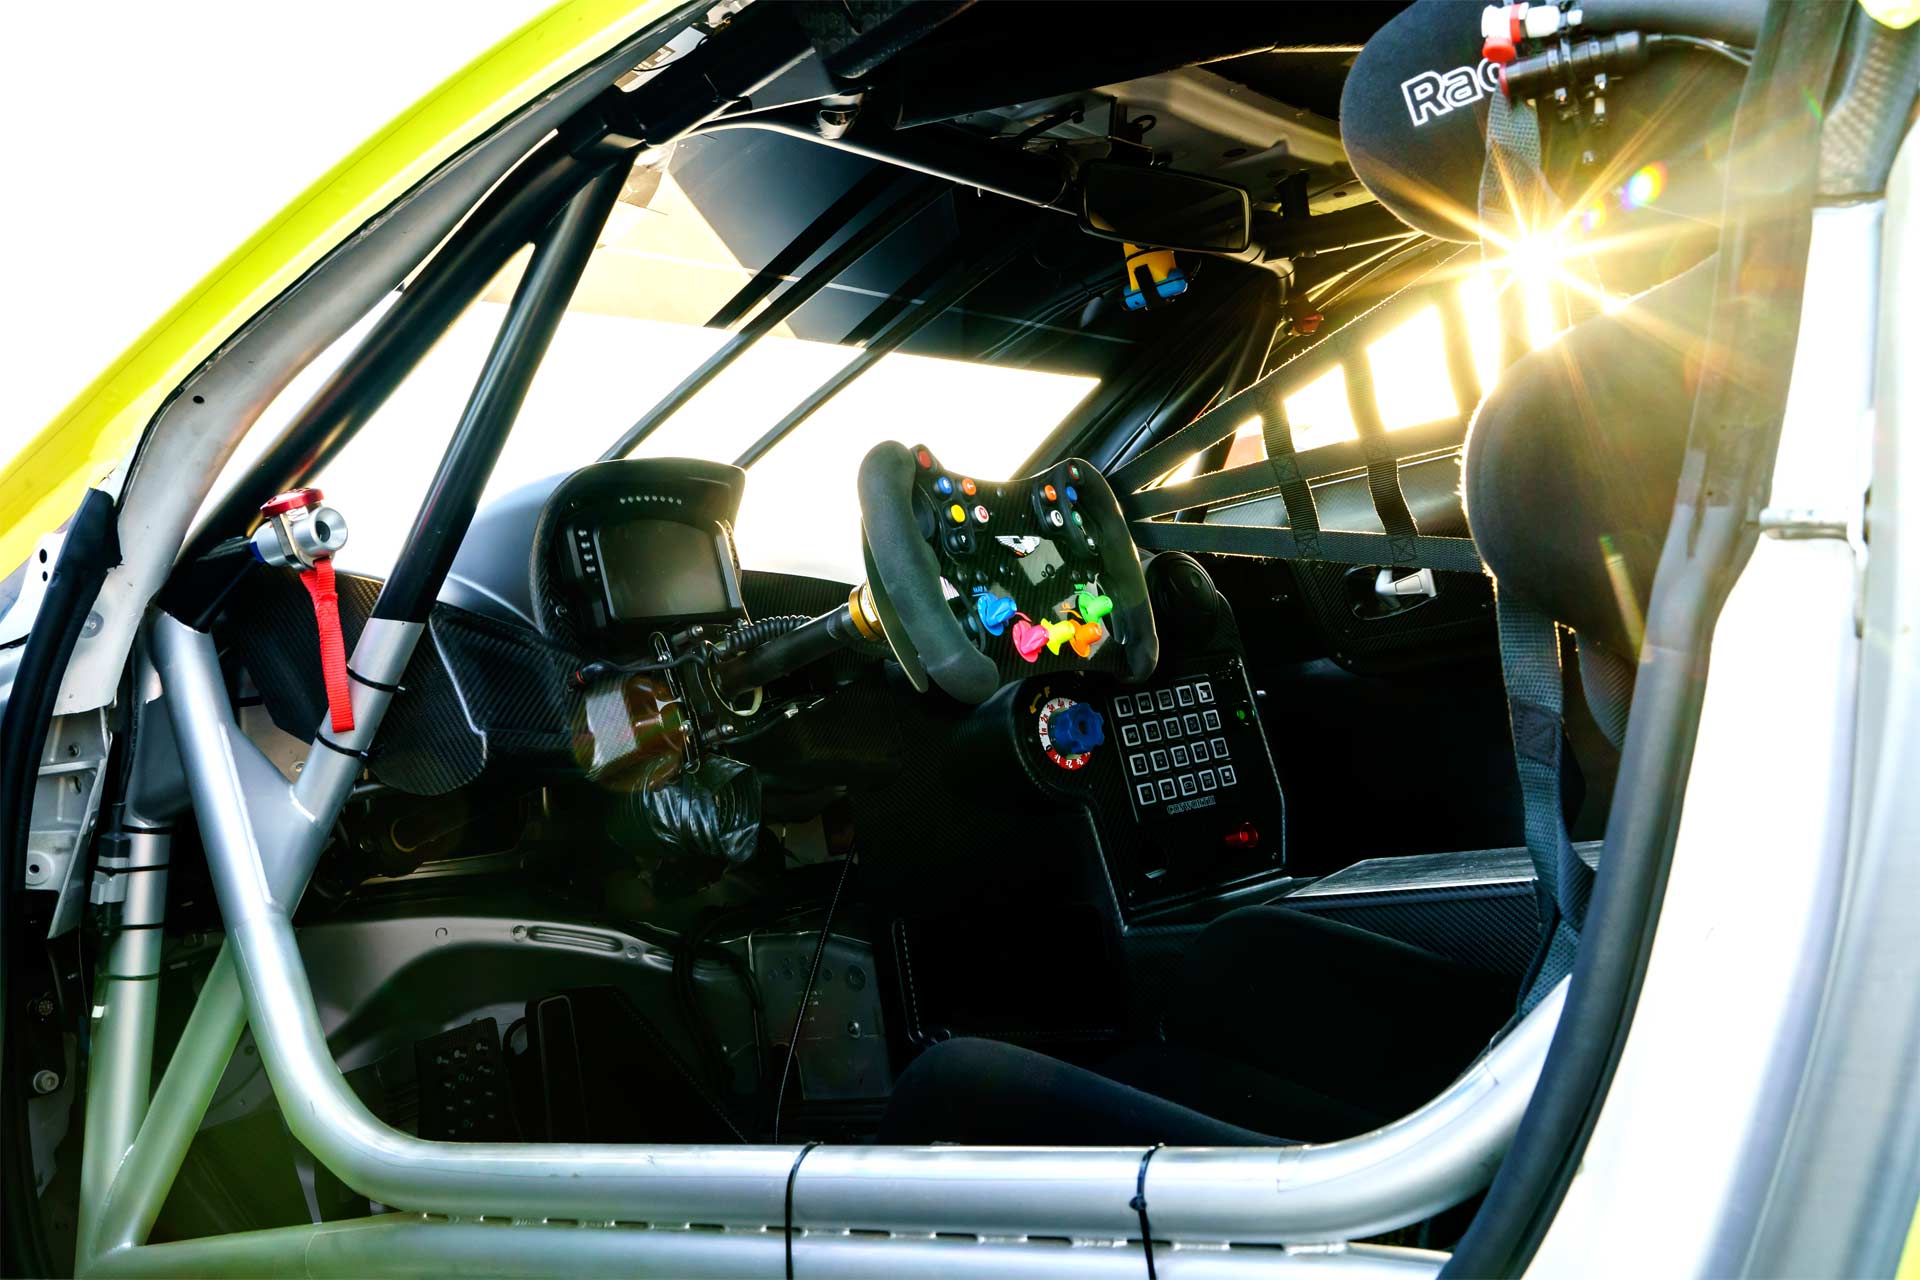 Aston-Martin-Racing-2018-Vantage-GTE-interior